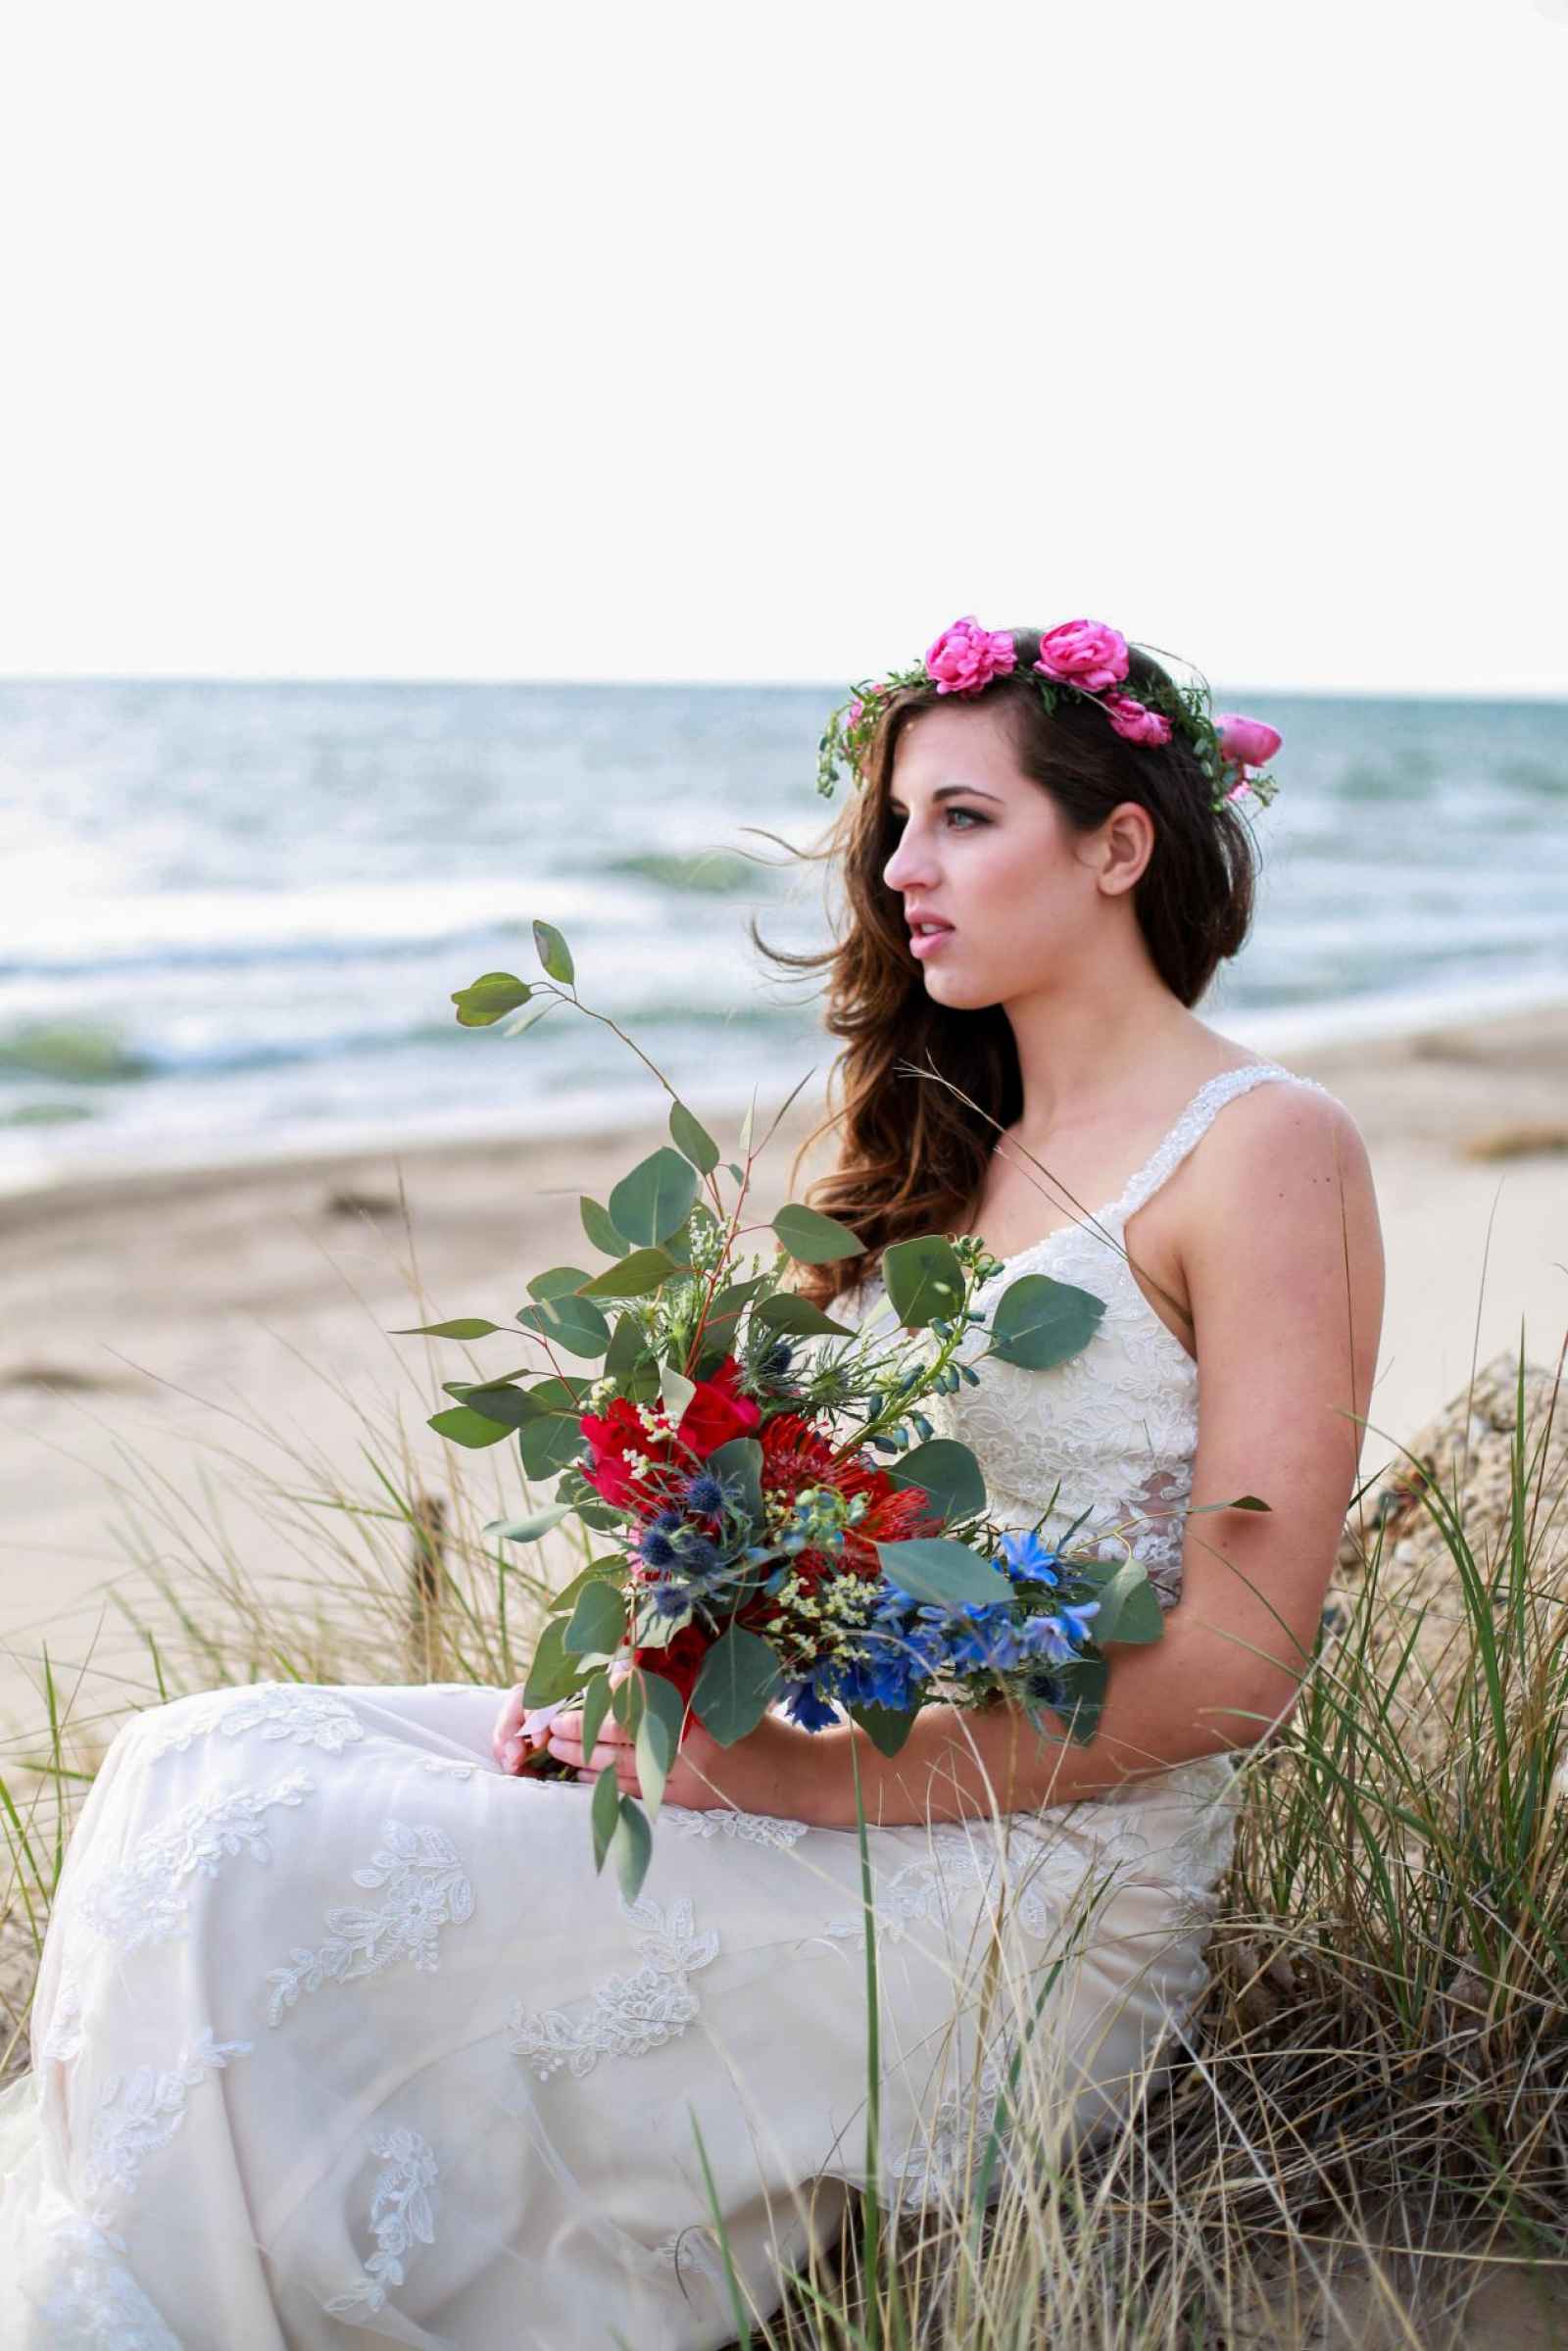 A Boho Beach Style Shoot | WeddingDay Magazine